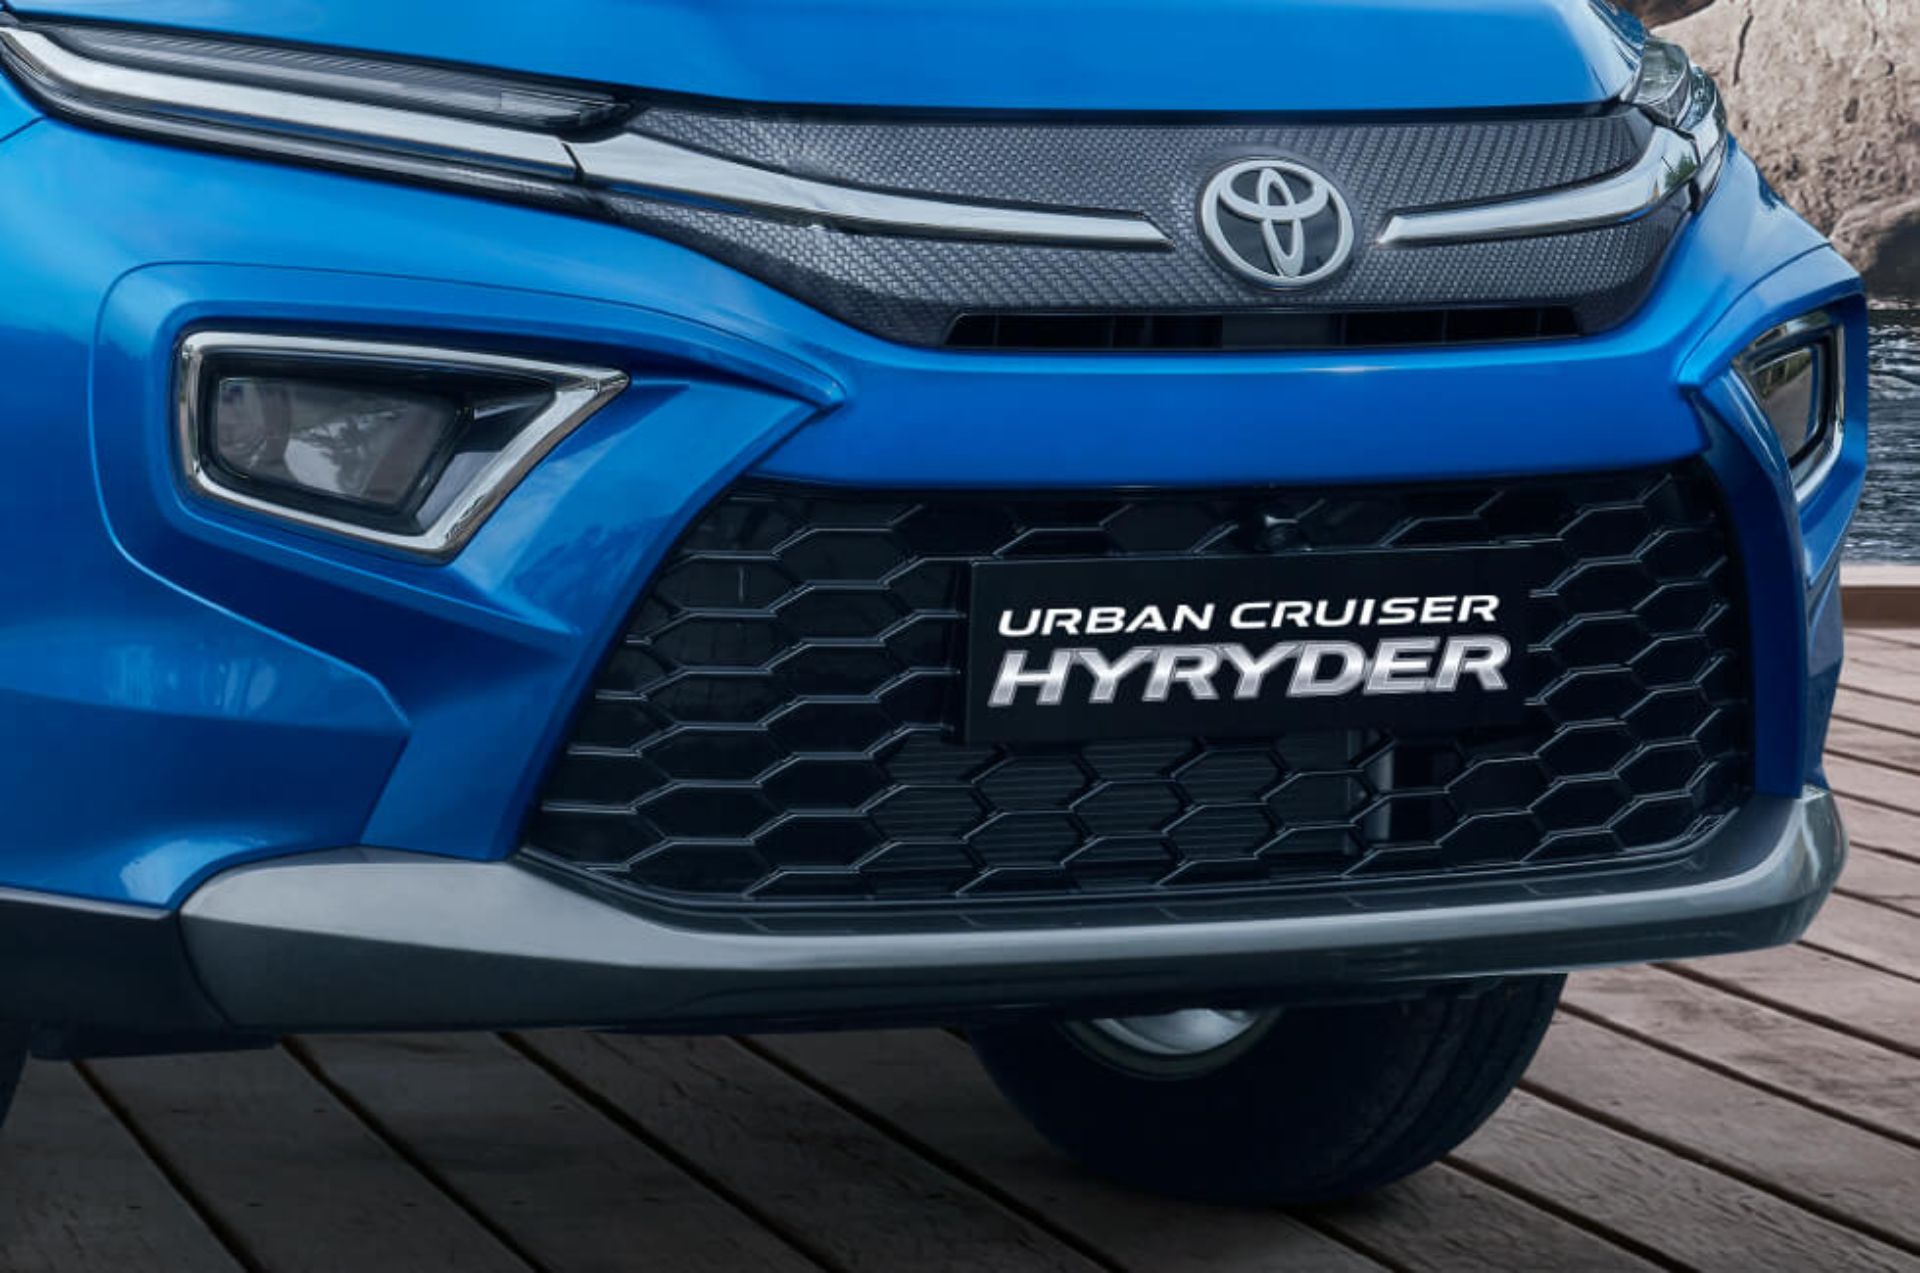 Toyota'nın yeni hibrit SUV'u Urban Cruiser Hyryder tanıtıldı